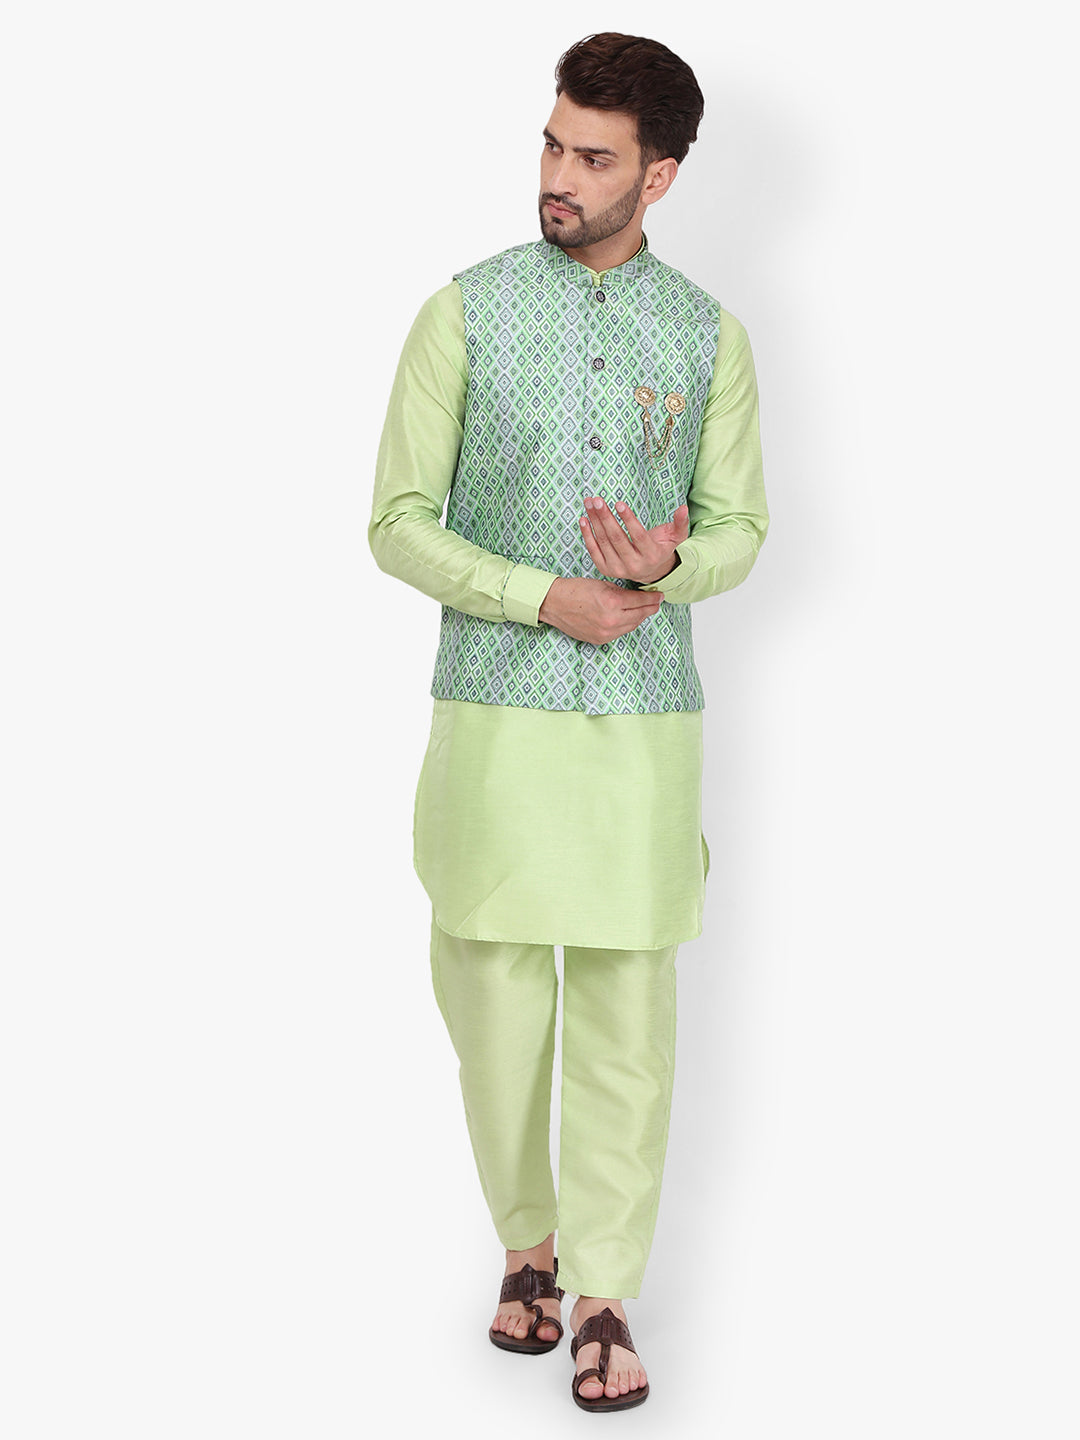 Modi Jacket for Men Customized Kurta Pajama with Jacket White Peas Green  KLP-MDJT-54-54011 – iBuyFromIndia